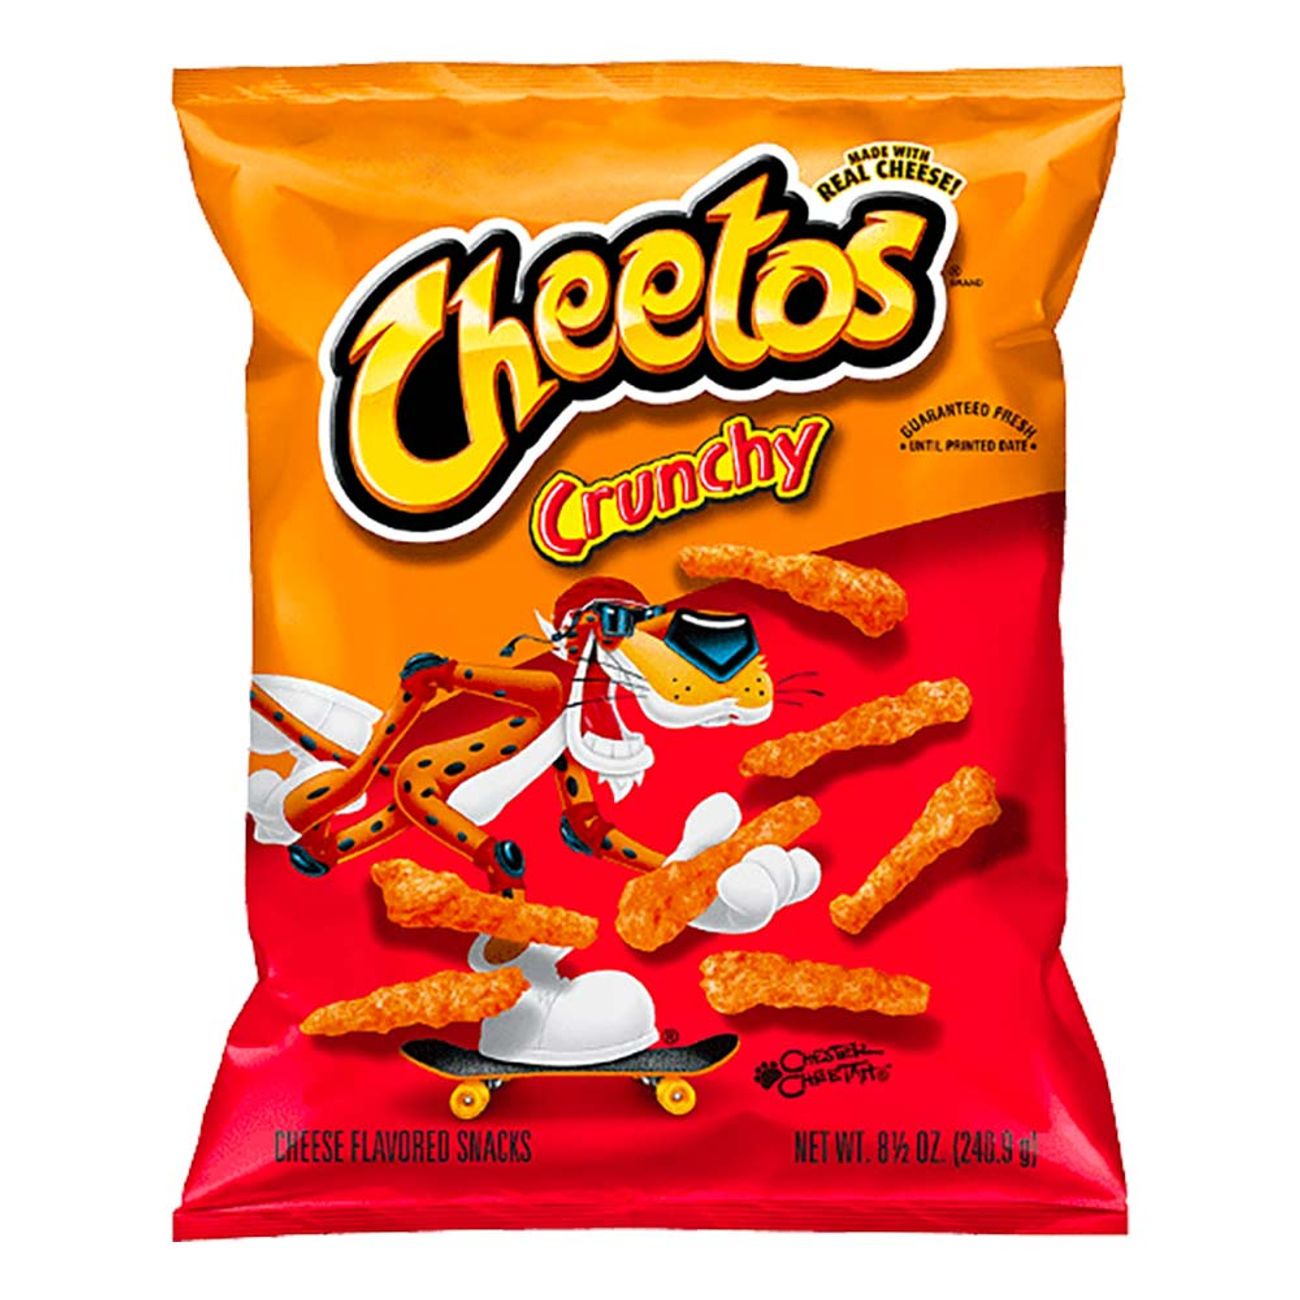 cheetos-crunchy-91955-2